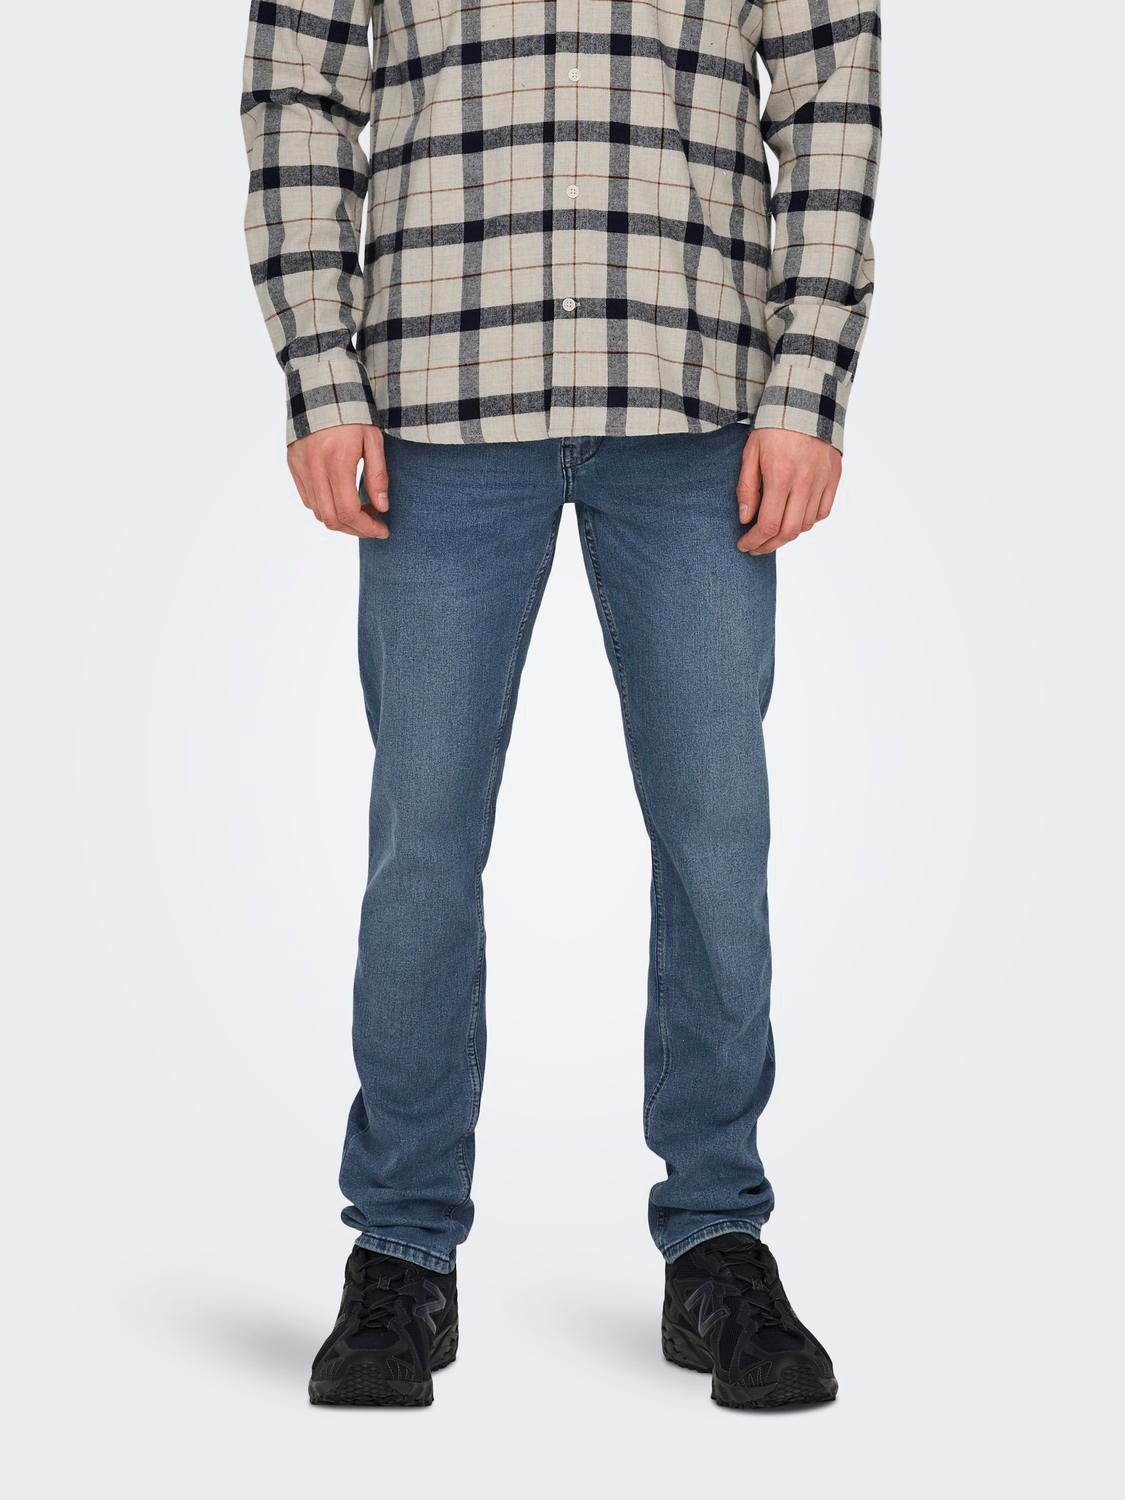 ONLY & SONS Jeans Slim Fit -Medium Blue Denim - 22027993